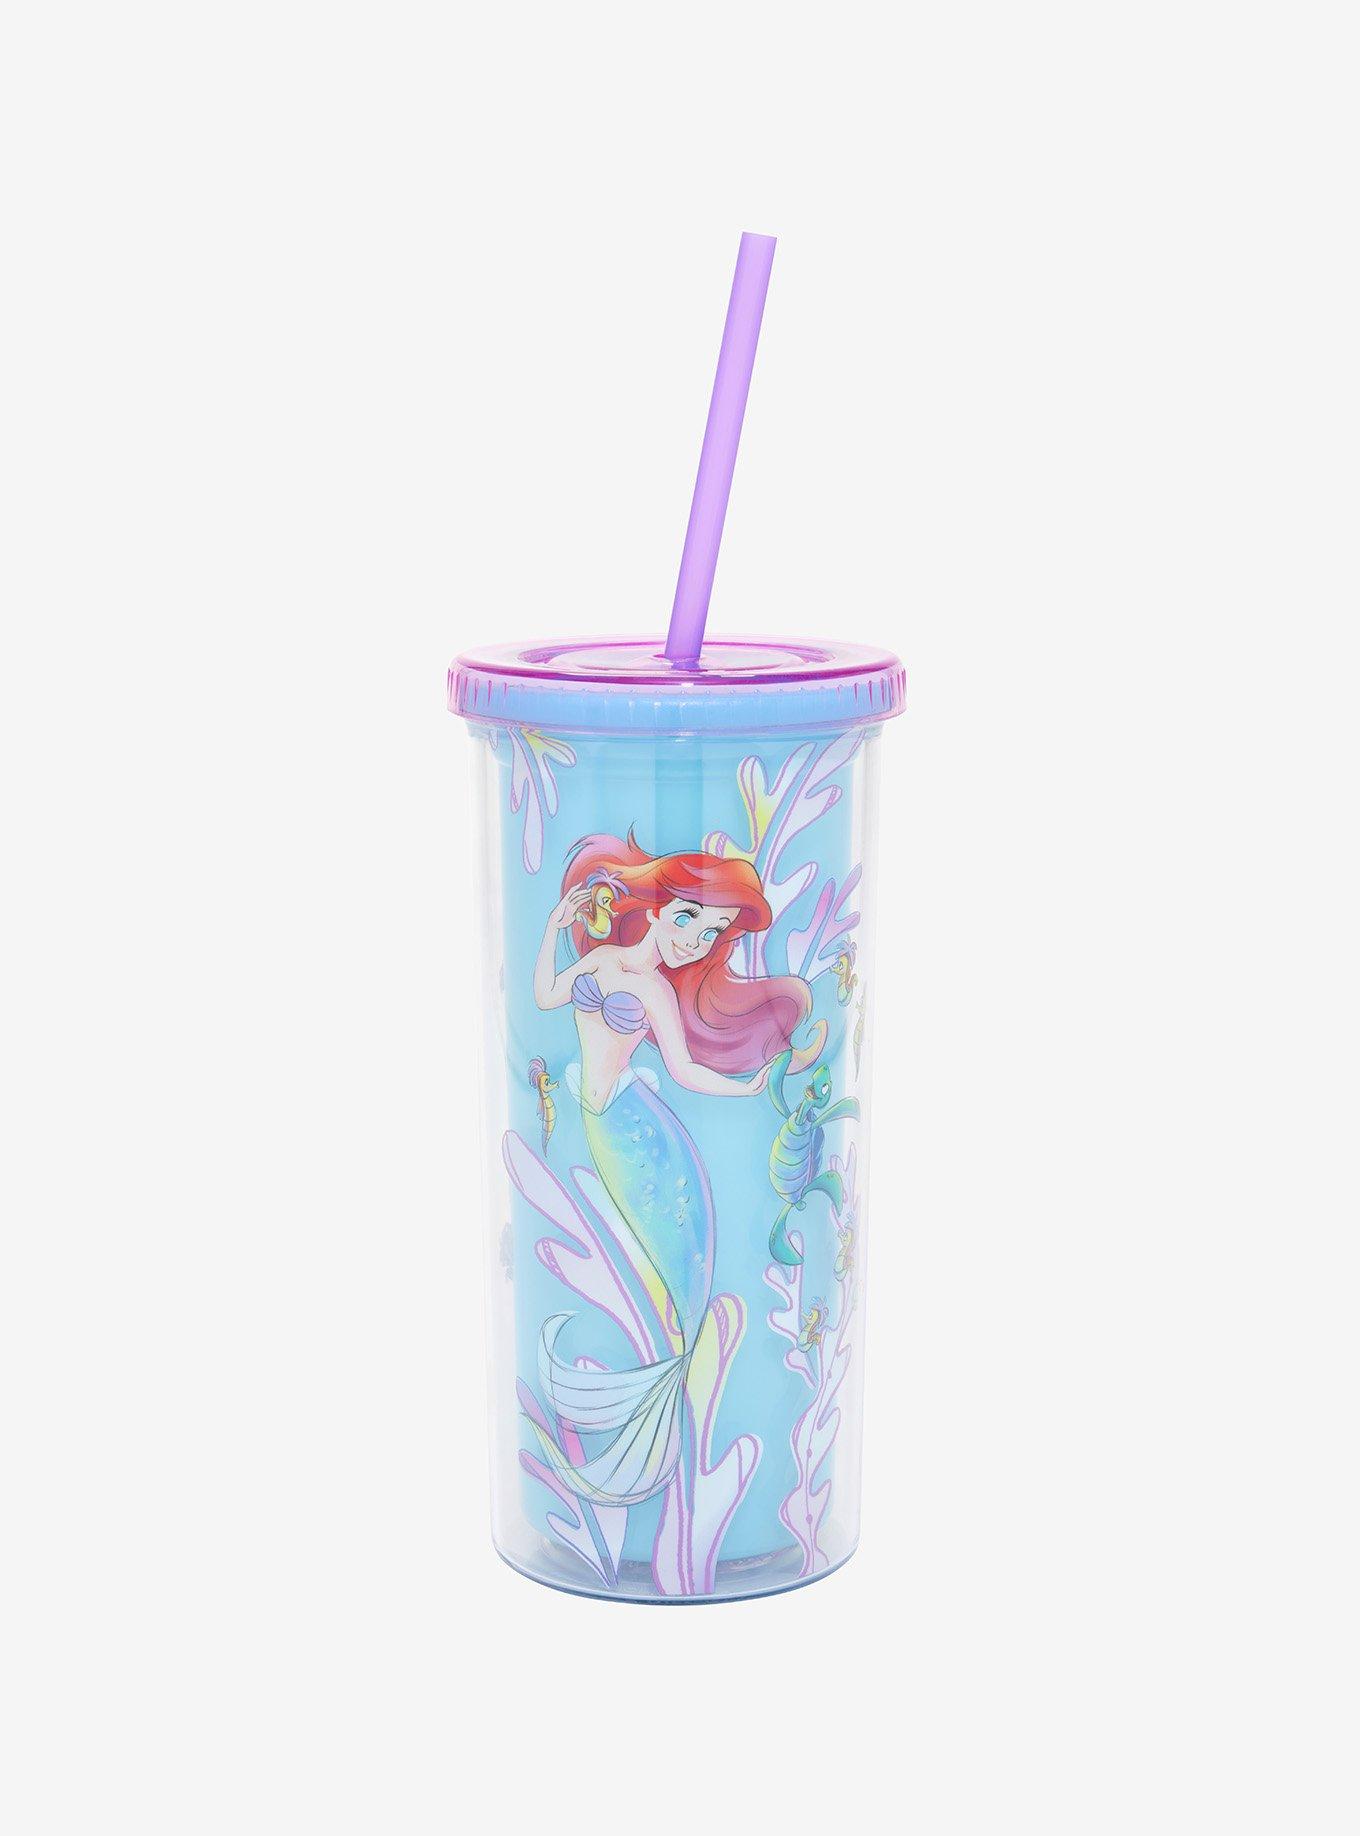 Disney Lilo & Stitch Color-Changing Plastic Cups